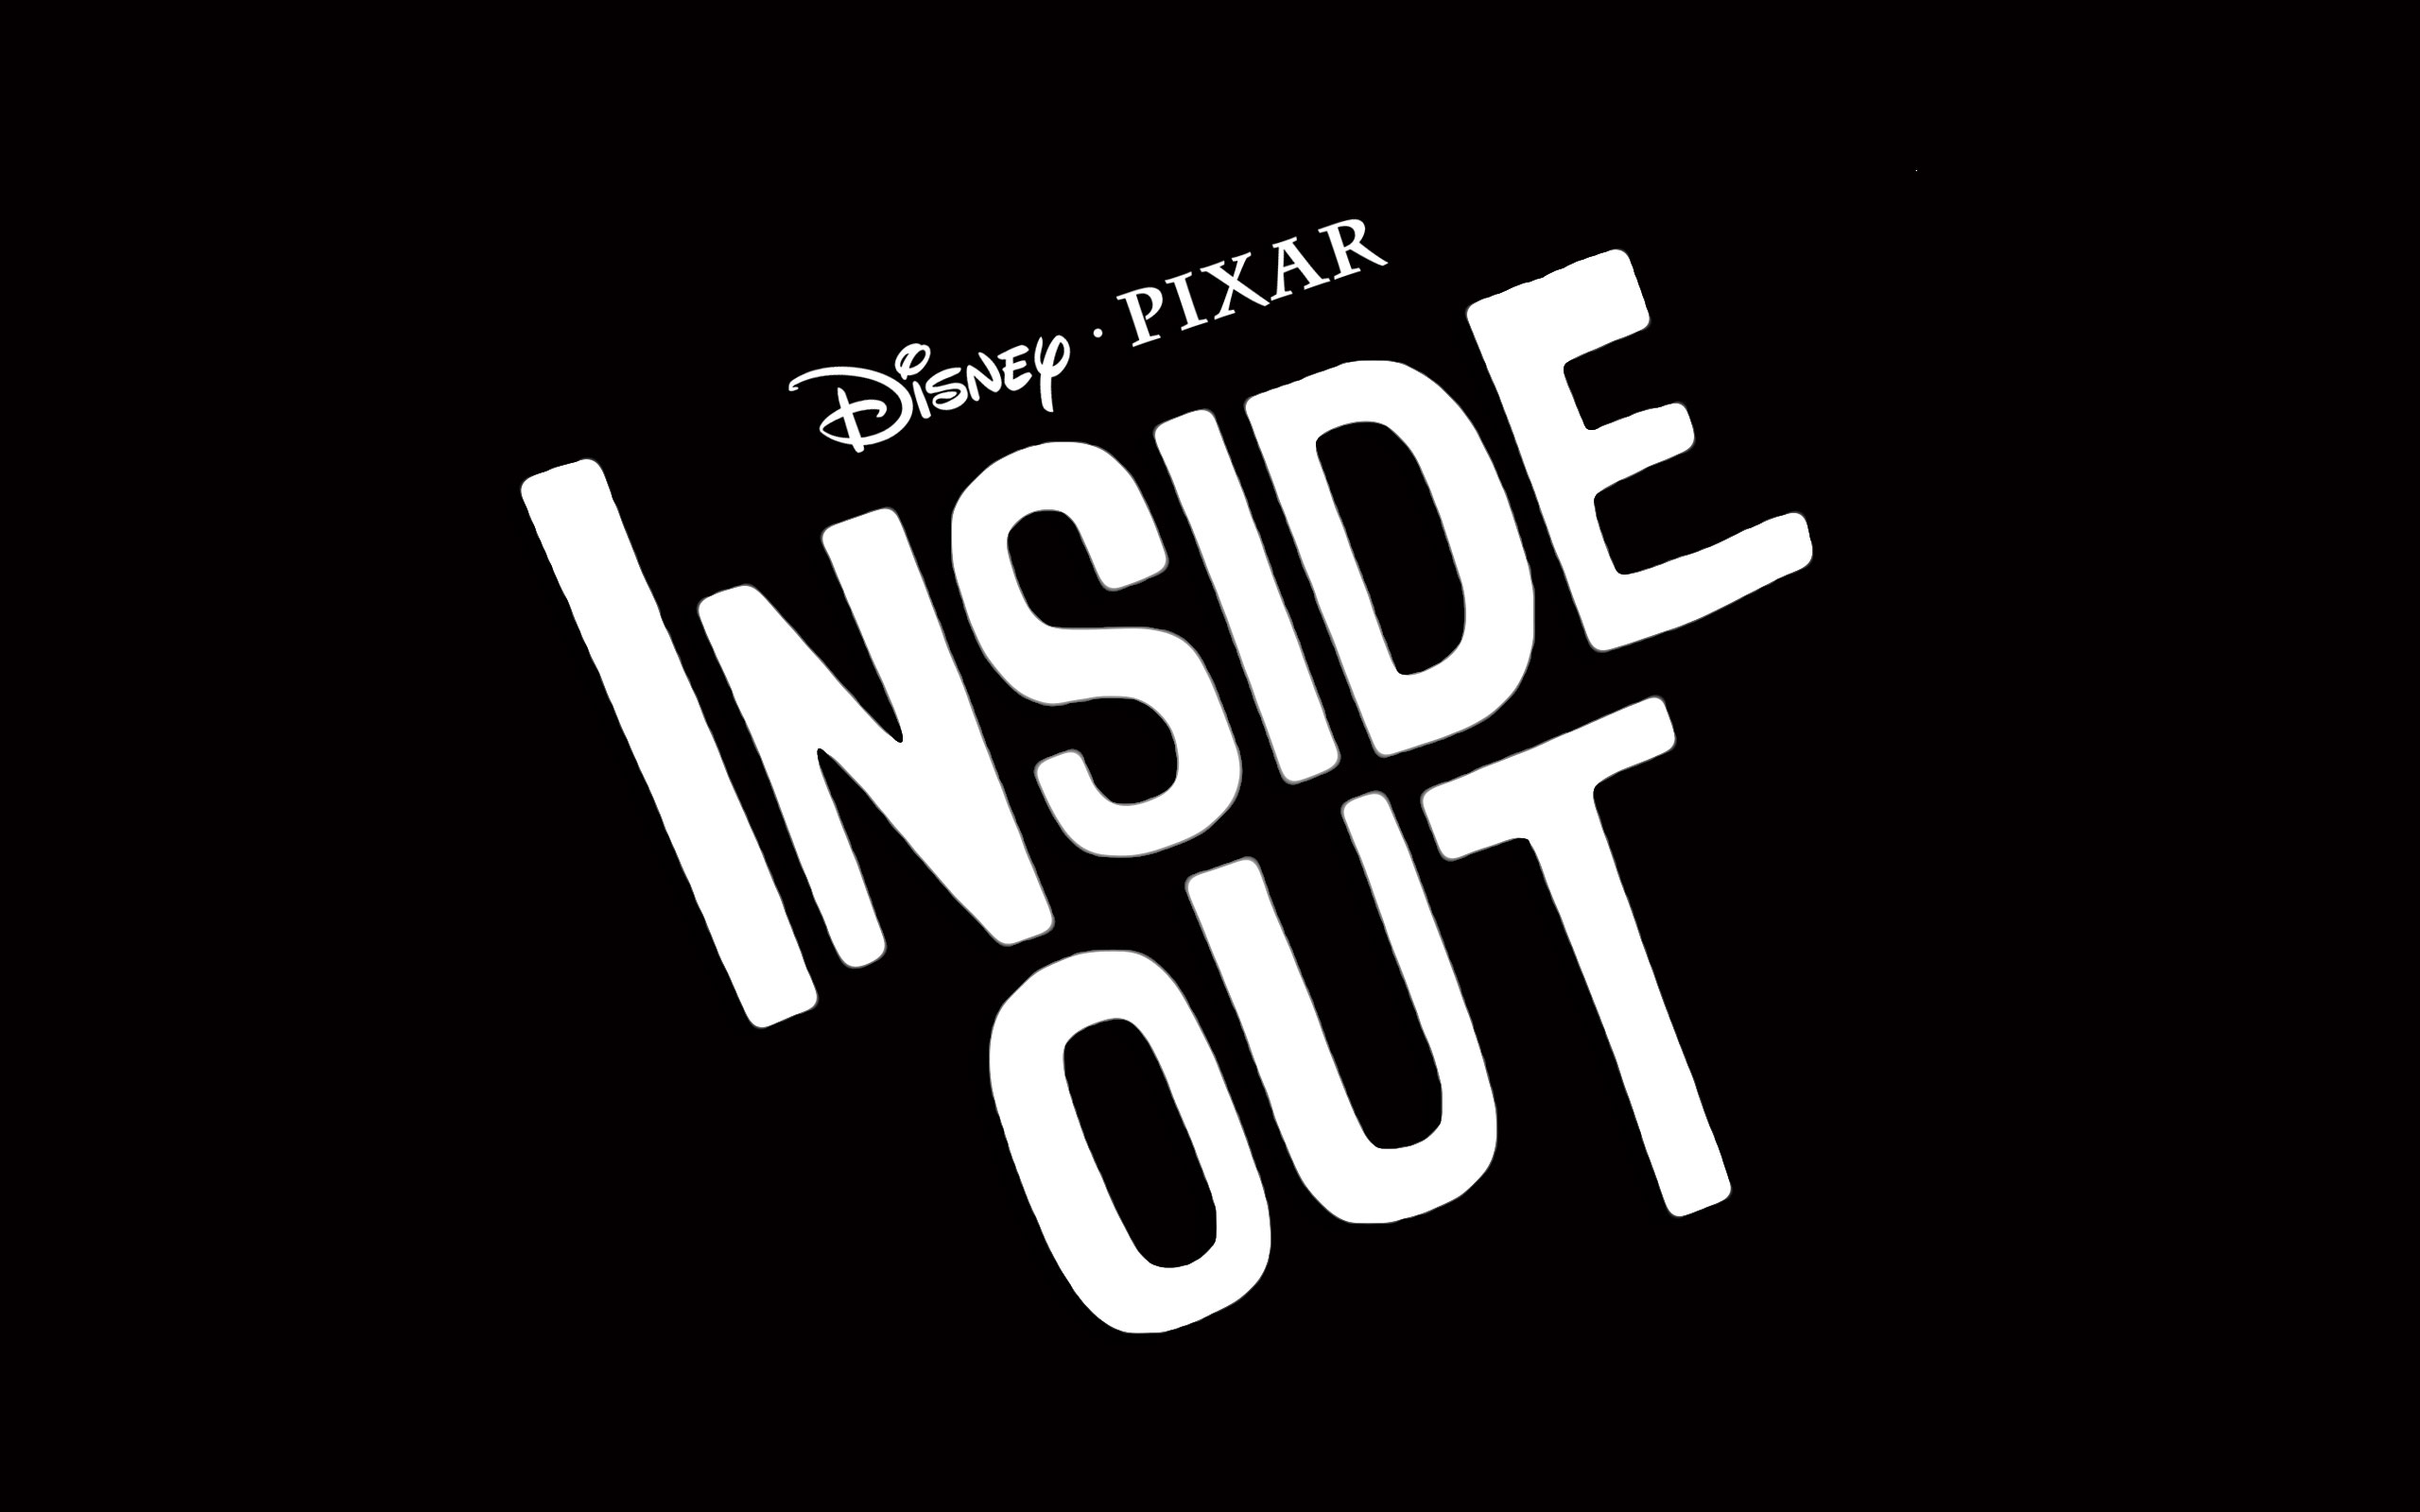 Disney Pixar Inside Out Logo 2560x1600 wallpaper